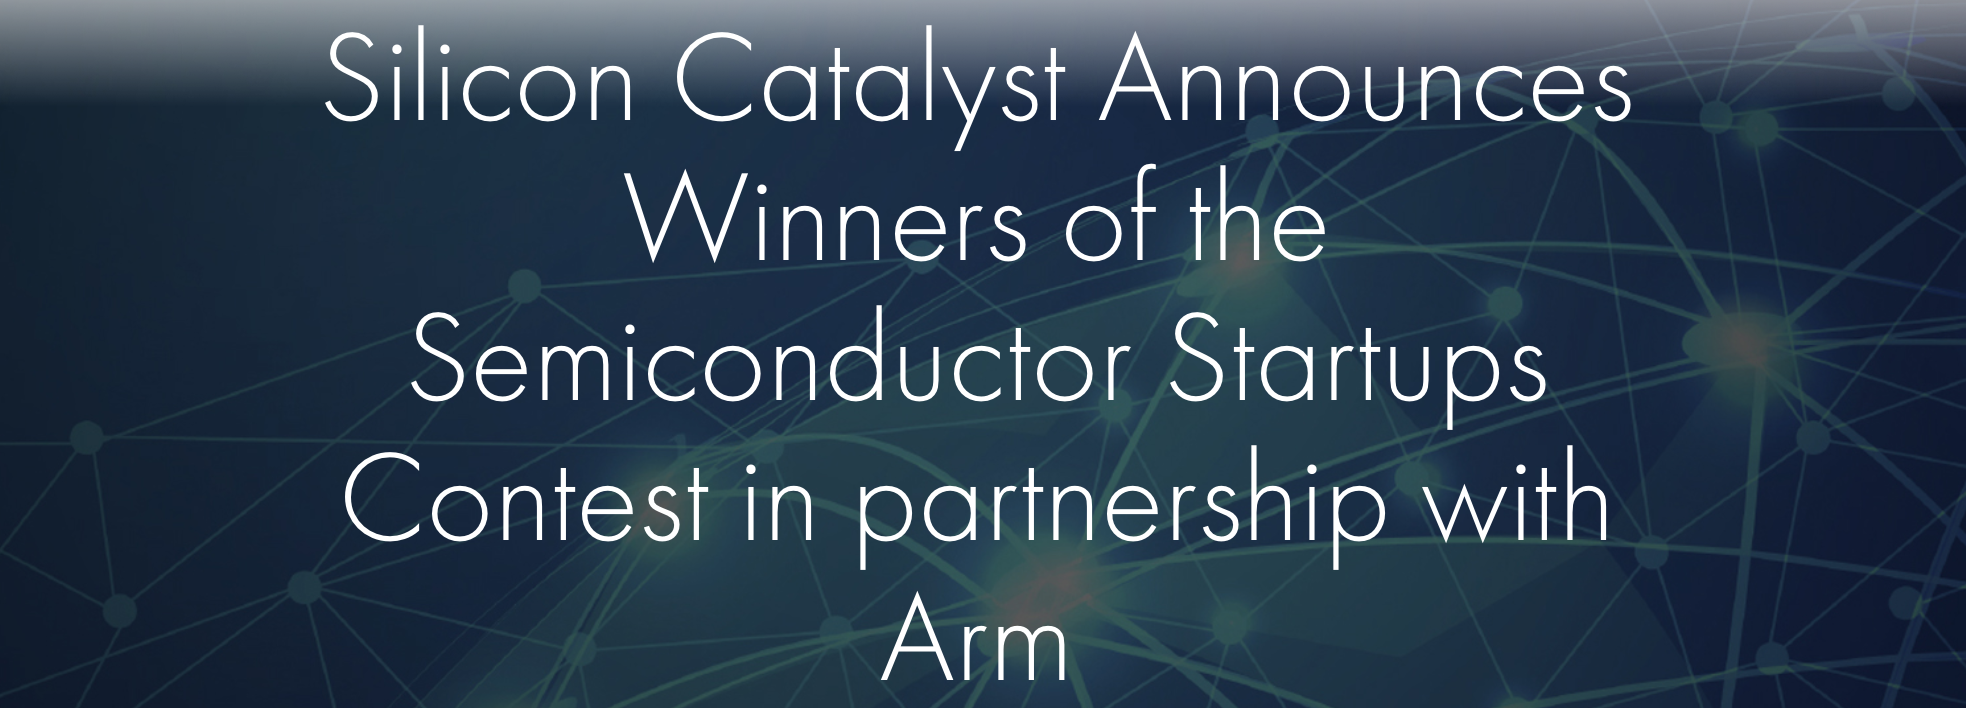 En titt på vinnerne av Silicon Catalyst/Arm Silicon Startups Contest - Semiwiki